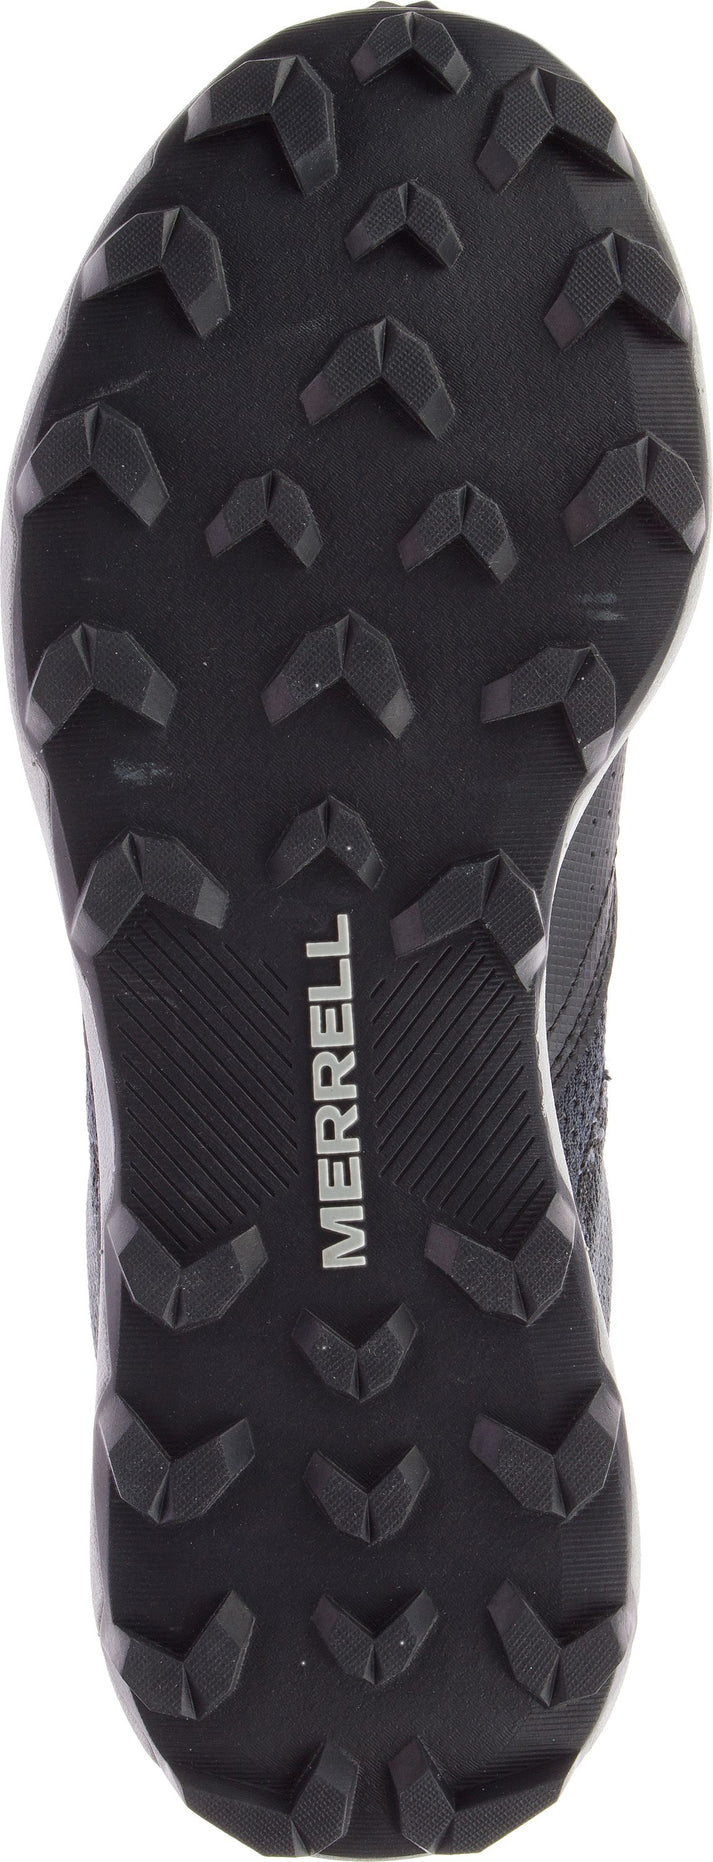 Merrell Shoes Ladies Sky Run Access Black